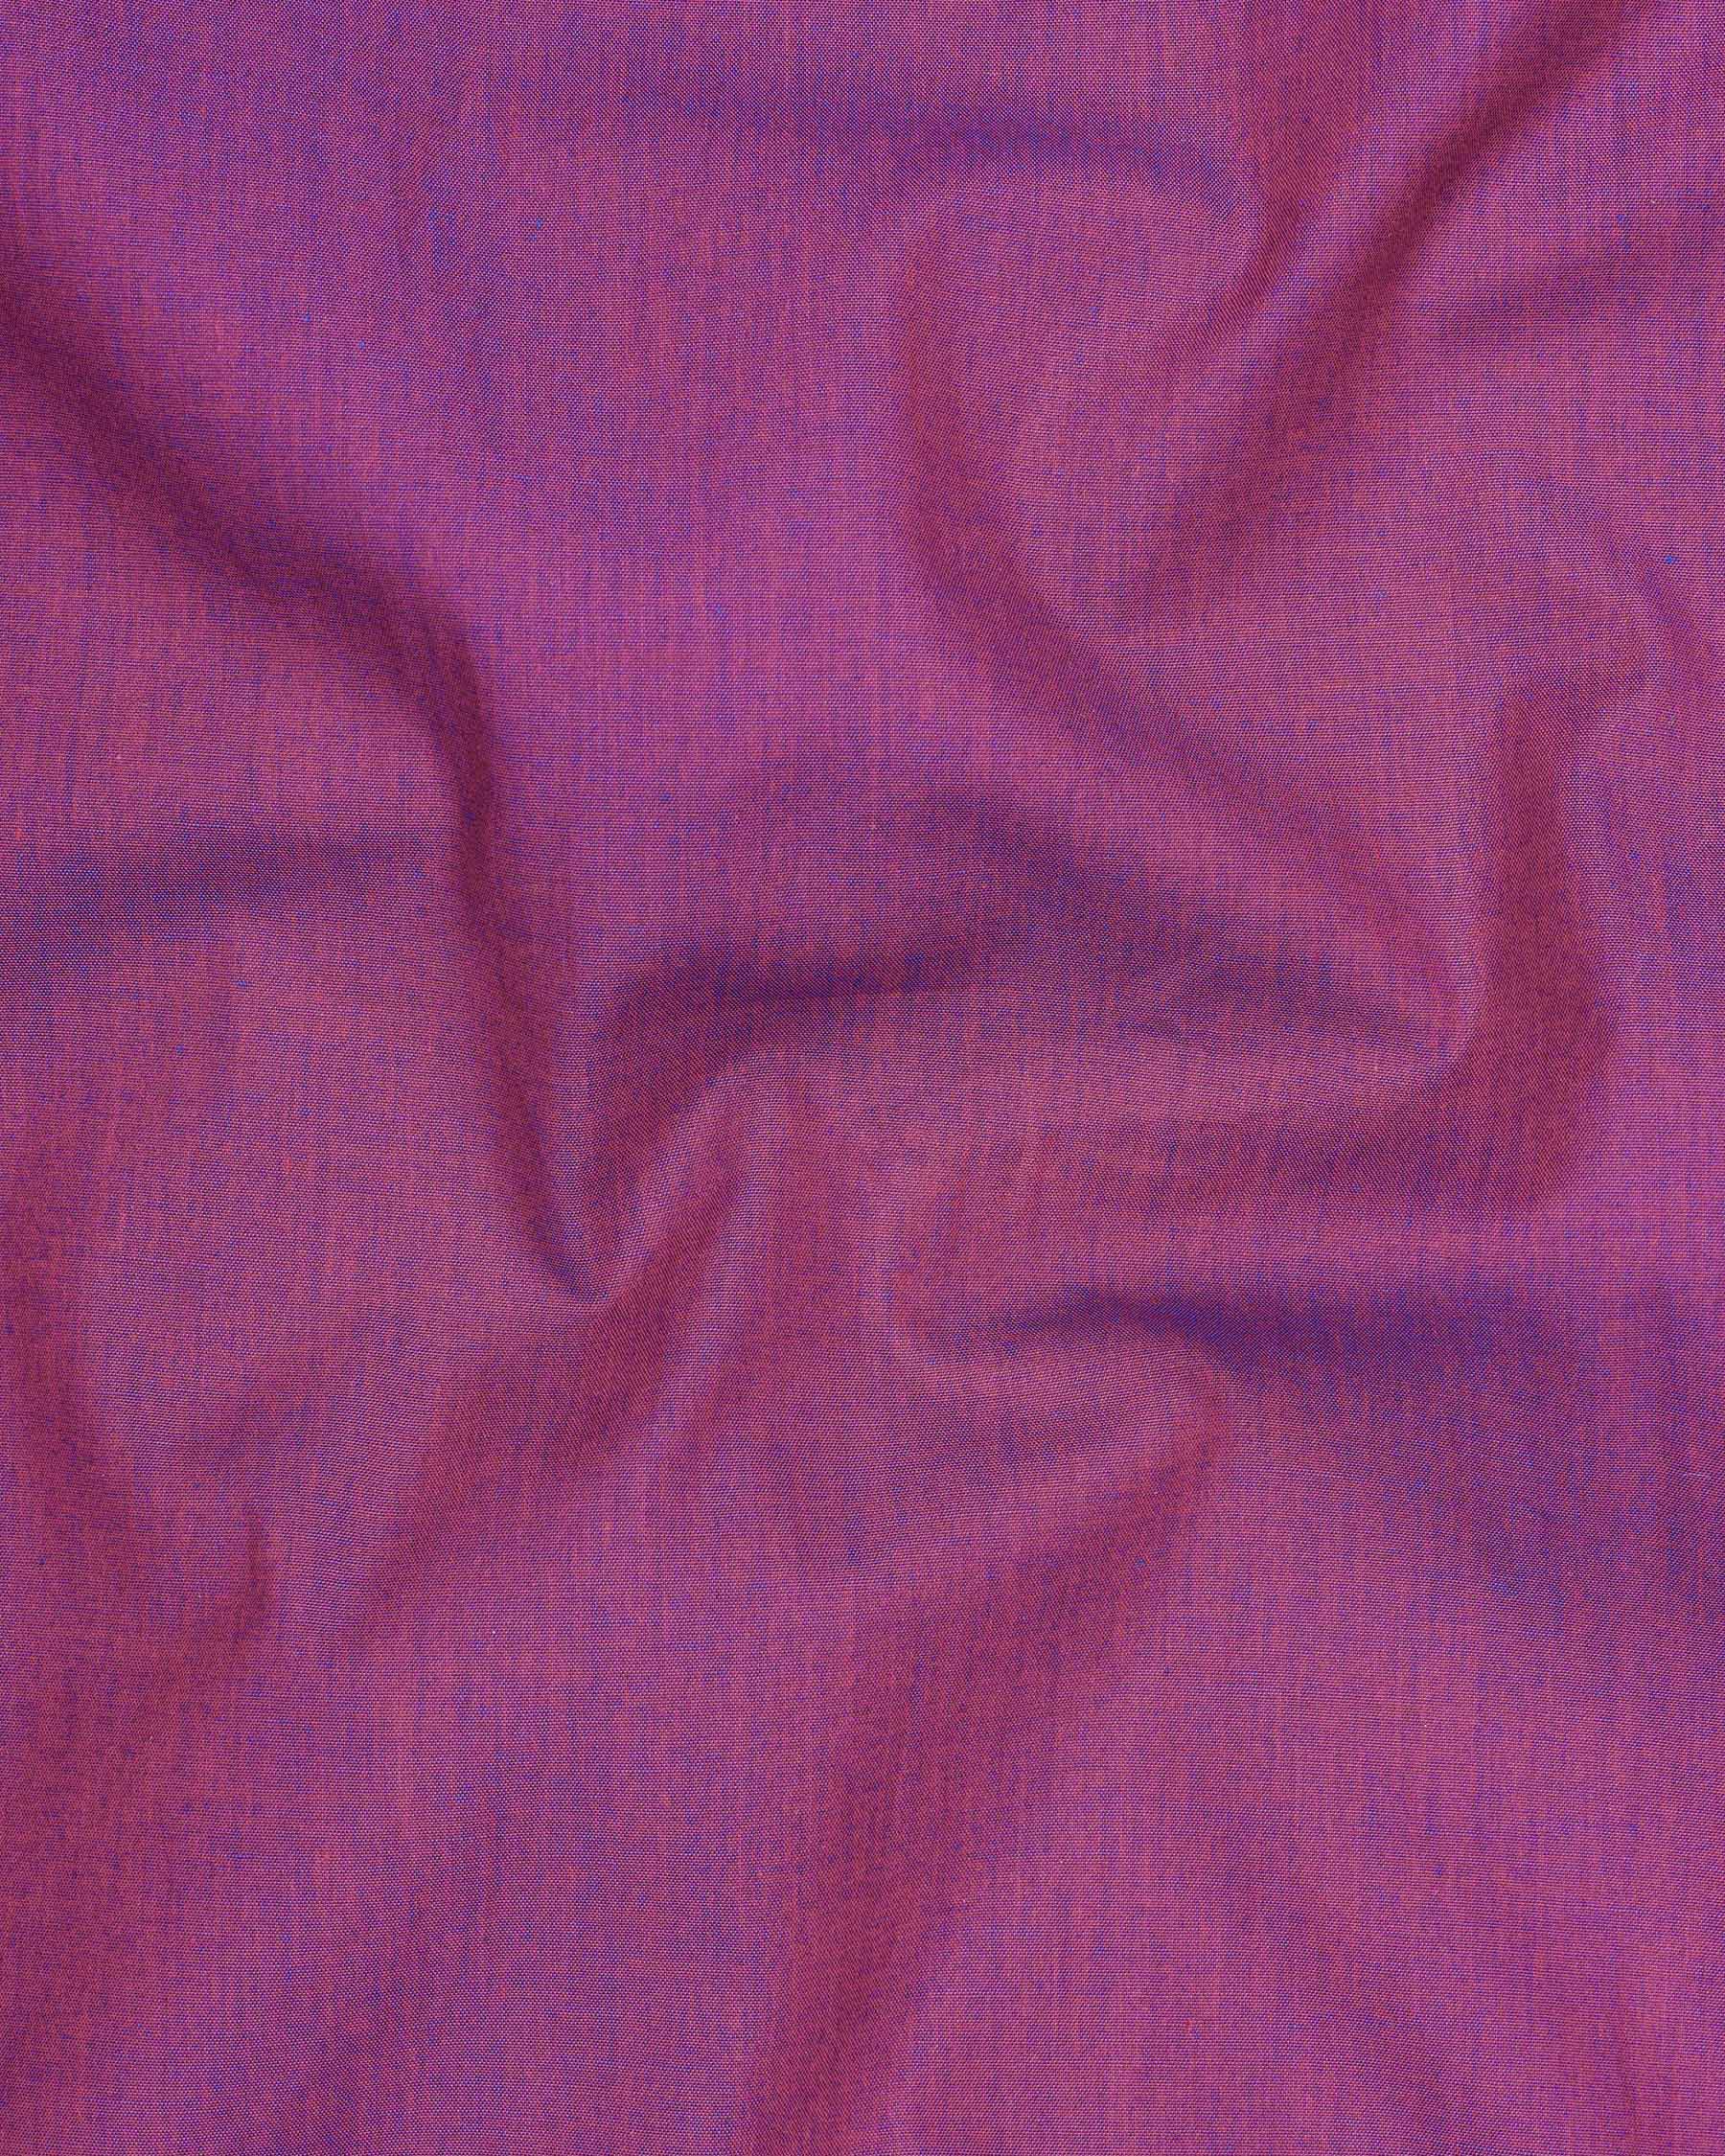 Byzantium Purple Chambray Textured Two-Tone Premium Cotton Shirt 7697-BLE-38,7697-BLE-38,7697-BLE-39,7697-BLE-39,7697-BLE-40,7697-BLE-40,7697-BLE-42,7697-BLE-42,7697-BLE-44,7697-BLE-44,7697-BLE-46,7697-BLE-46,7697-BLE-48,7697-BLE-48,7697-BLE-50,7697-BLE-50,7697-BLE-52,7697-BLE-52